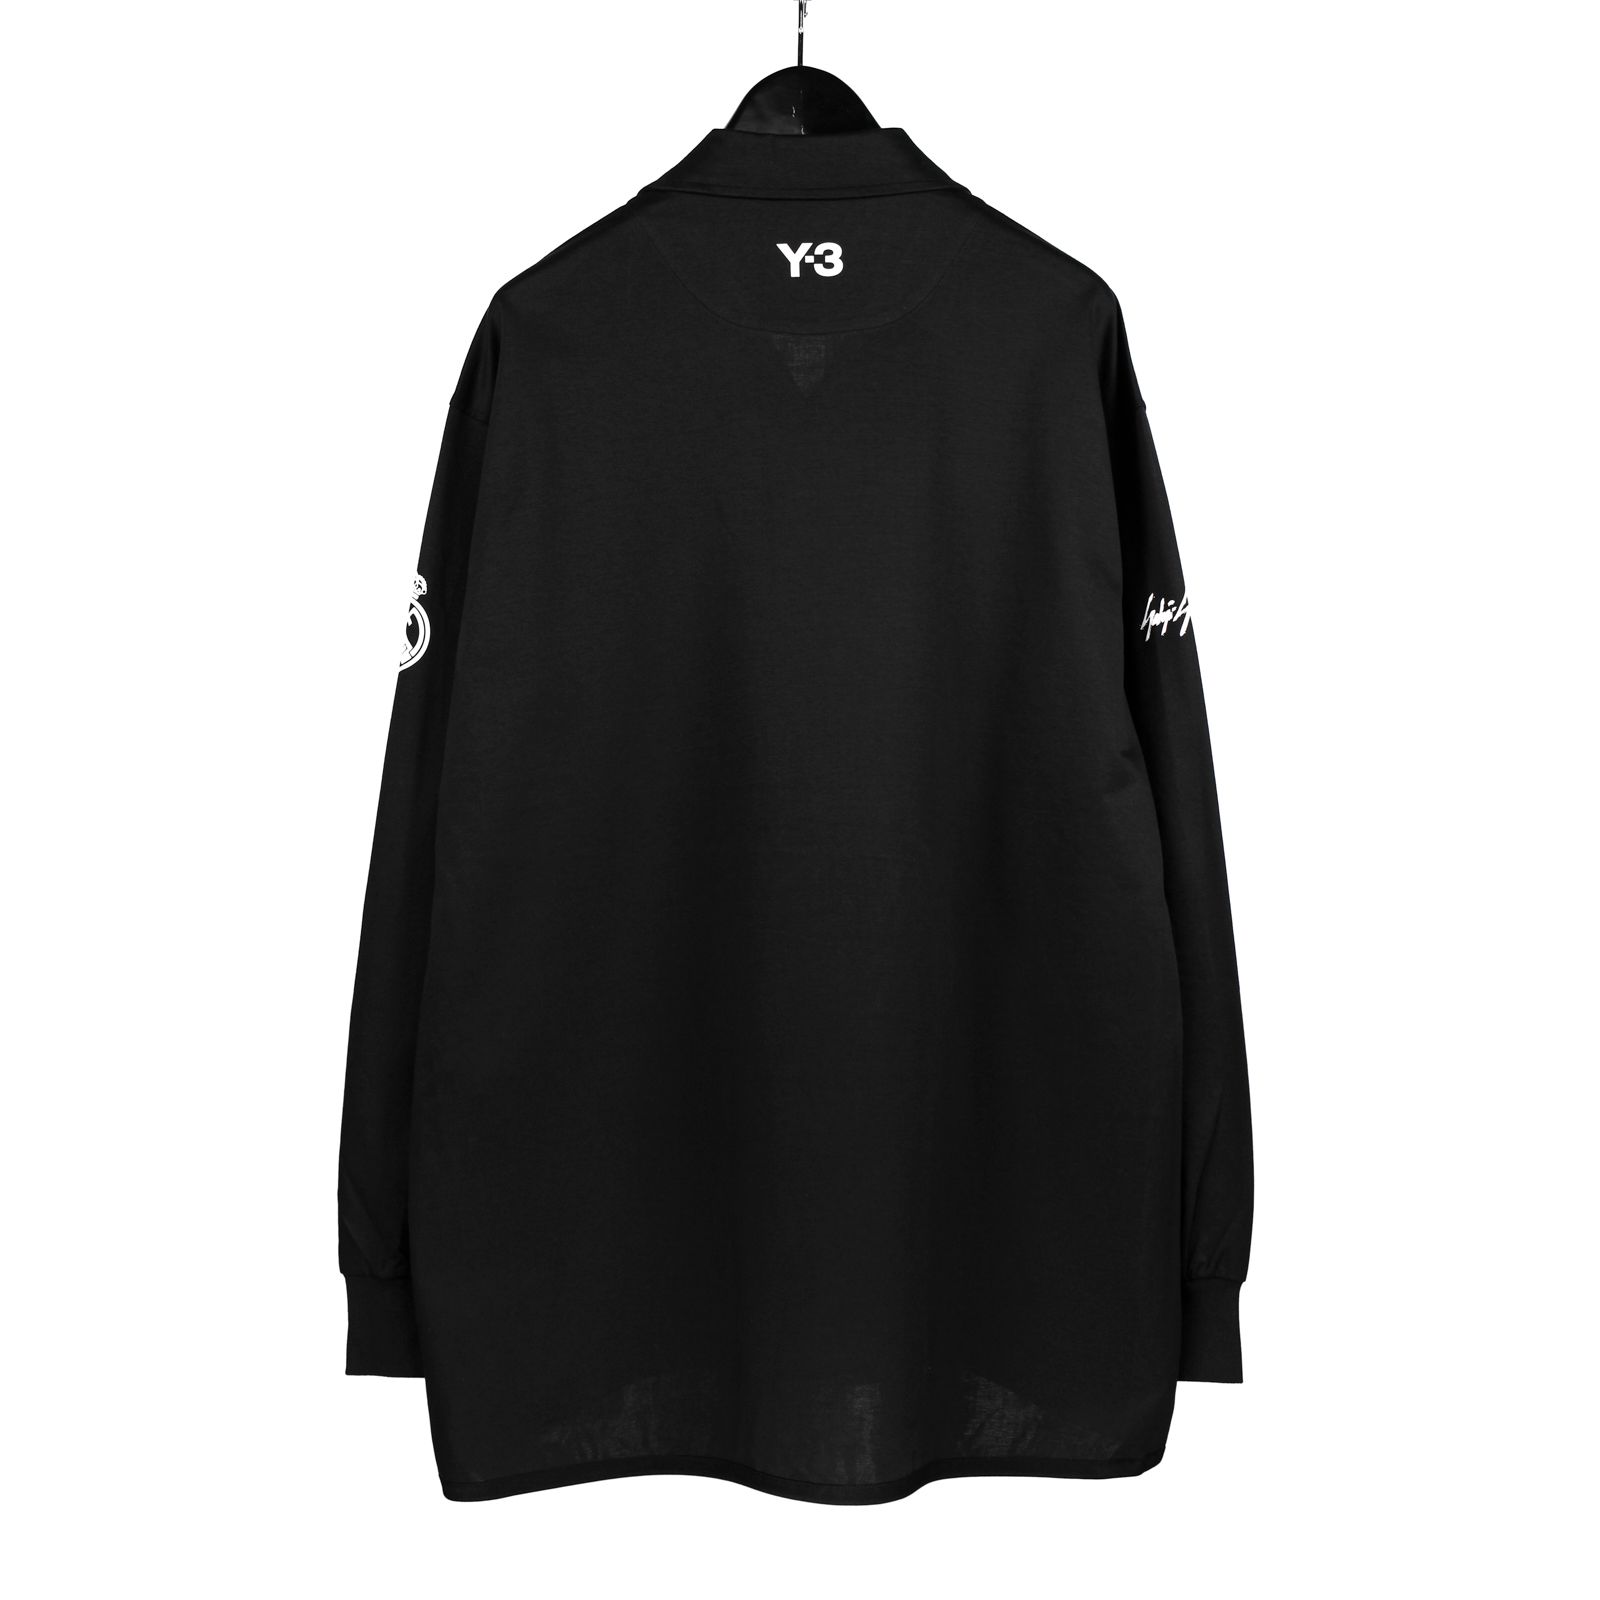 yohji yamamoto - Y-3 | RM LS POLO / 長袖 ポロシャツ (メンズ) / ブラック / IT3712-APPS24 |  ALUBUS / RUFUS